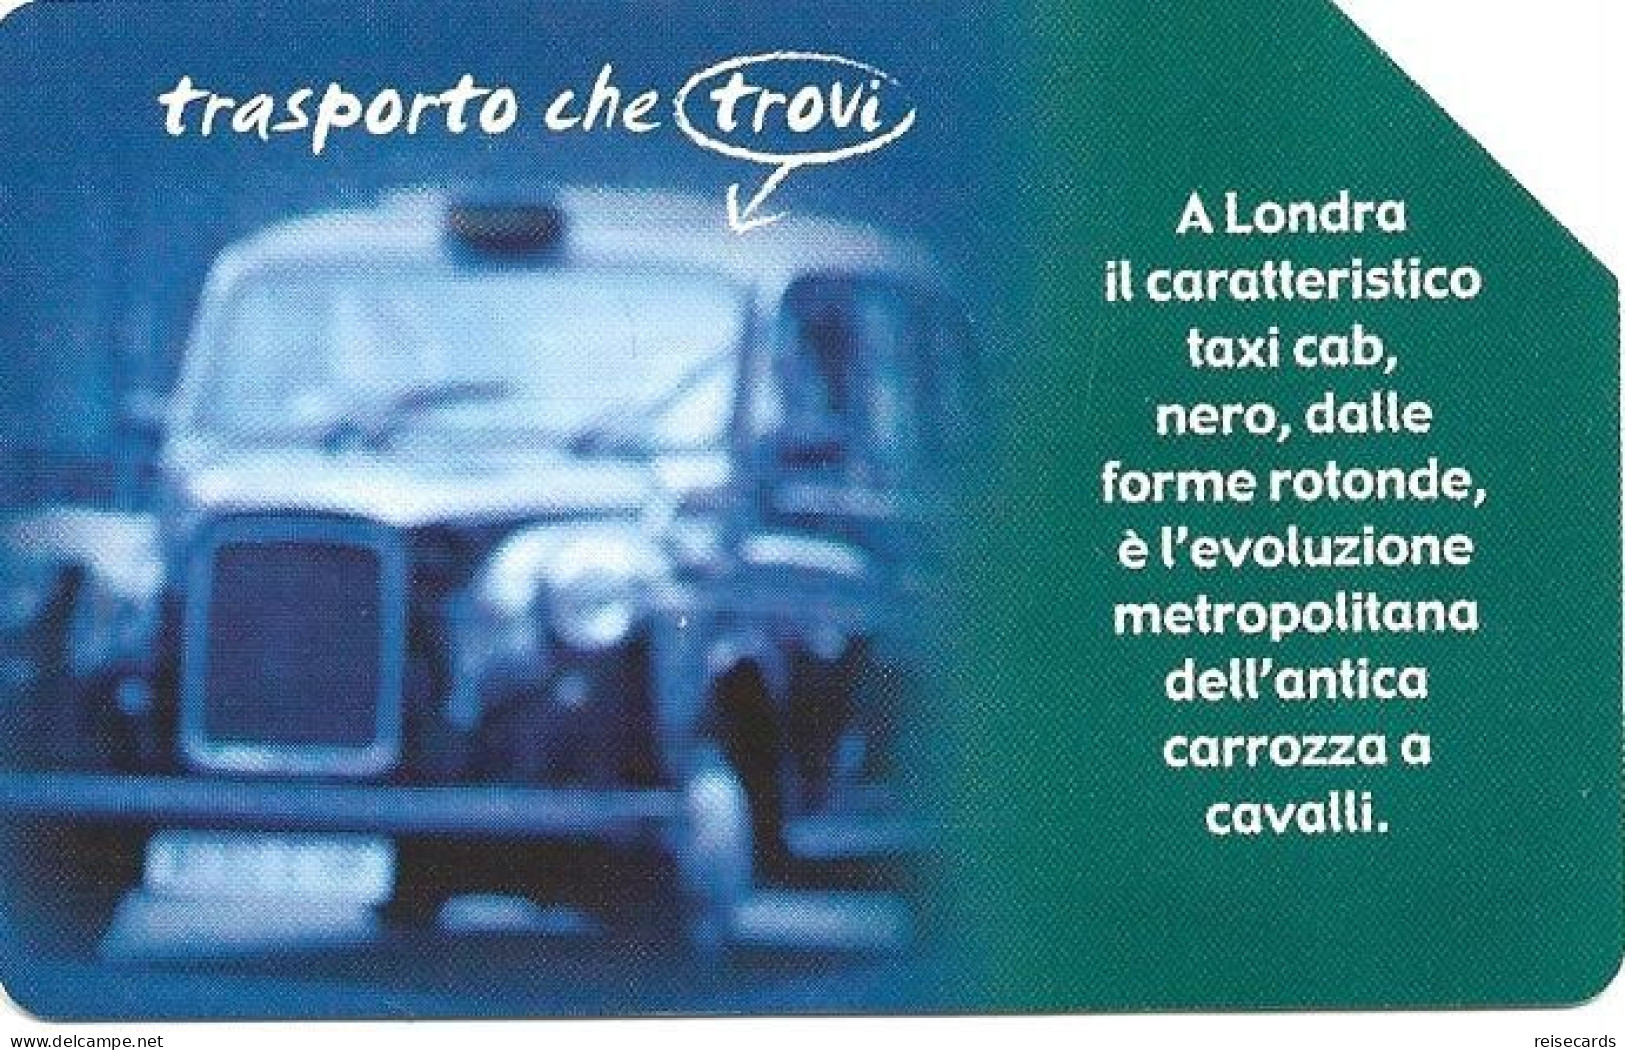 Italy: Telecom Italia - London Taxi Cab - Public Advertising